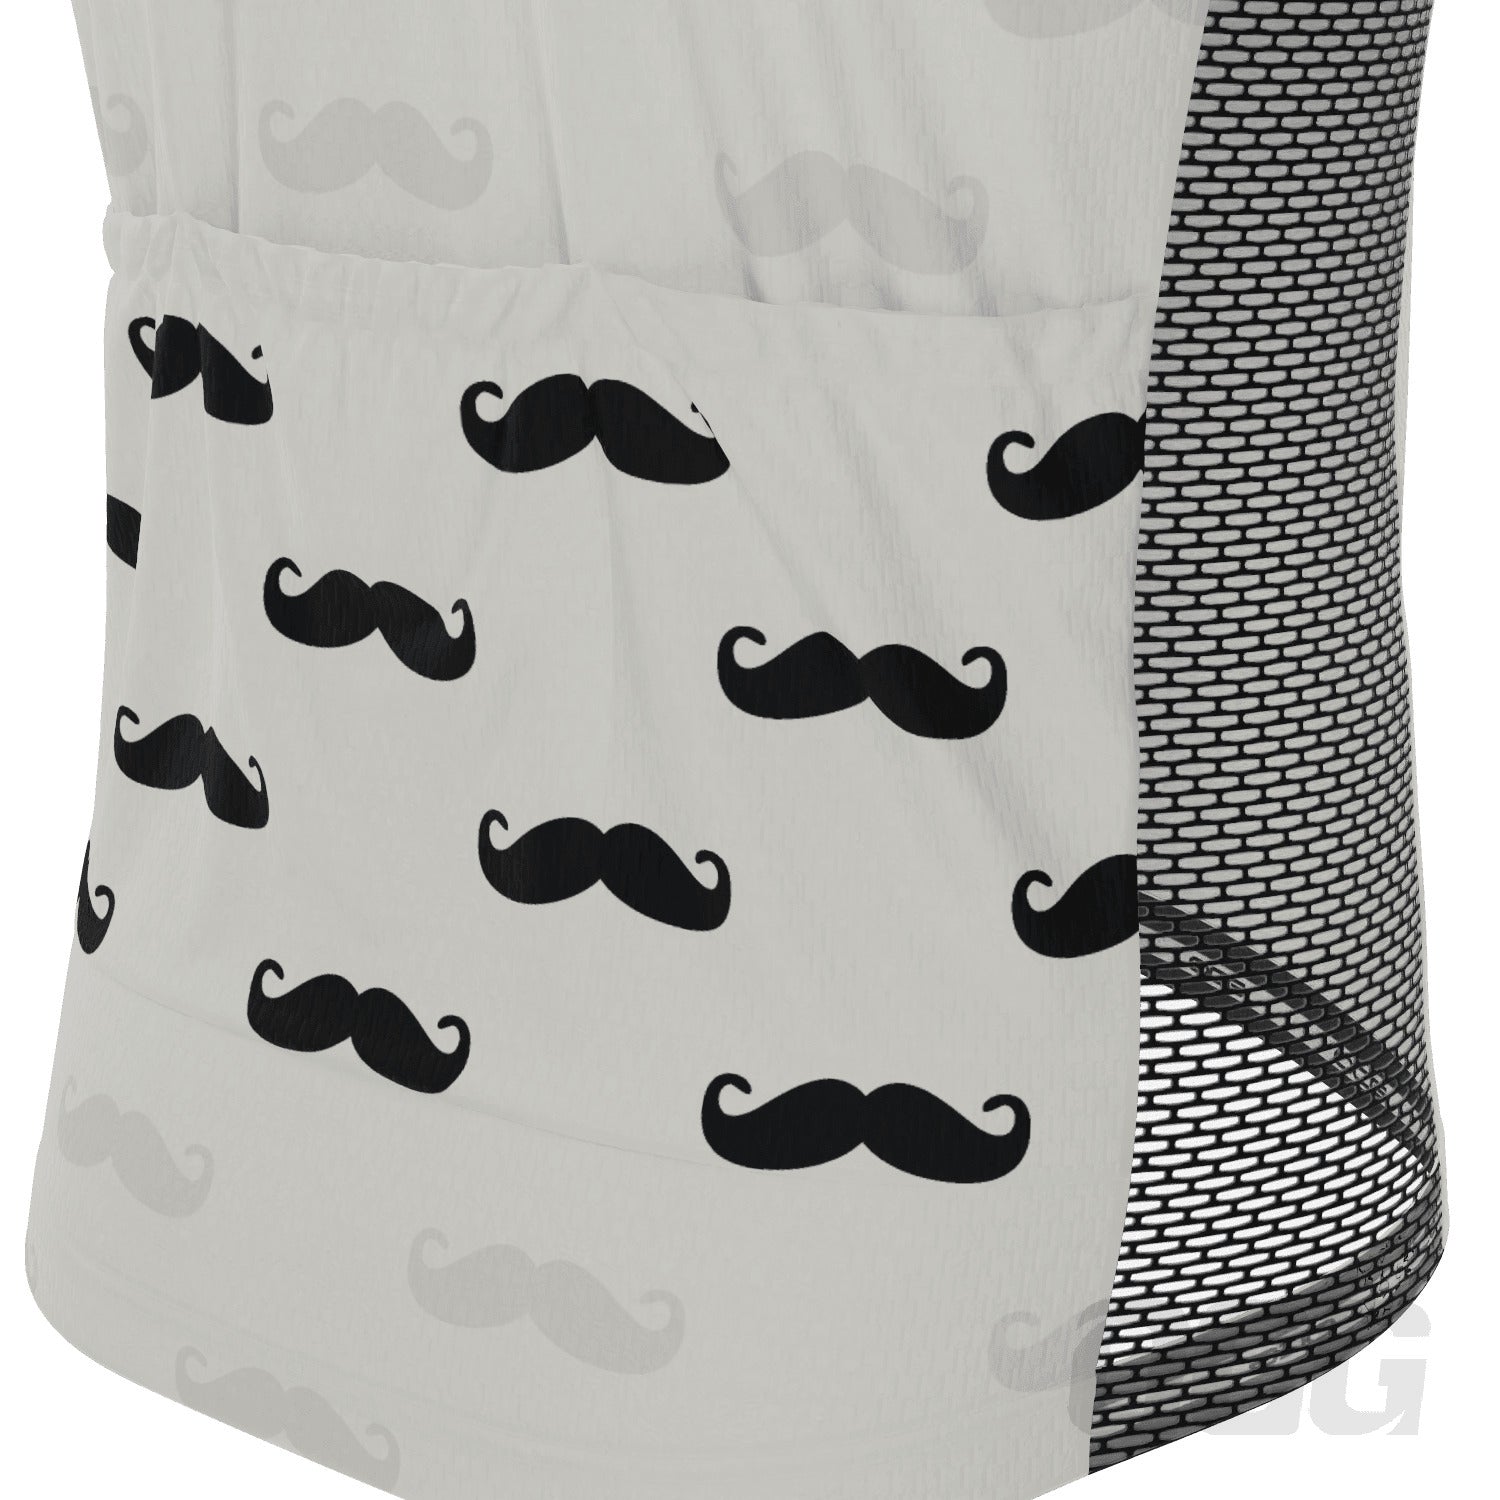 Men's Hairy Moustache Short Sleeve Cycling Kit